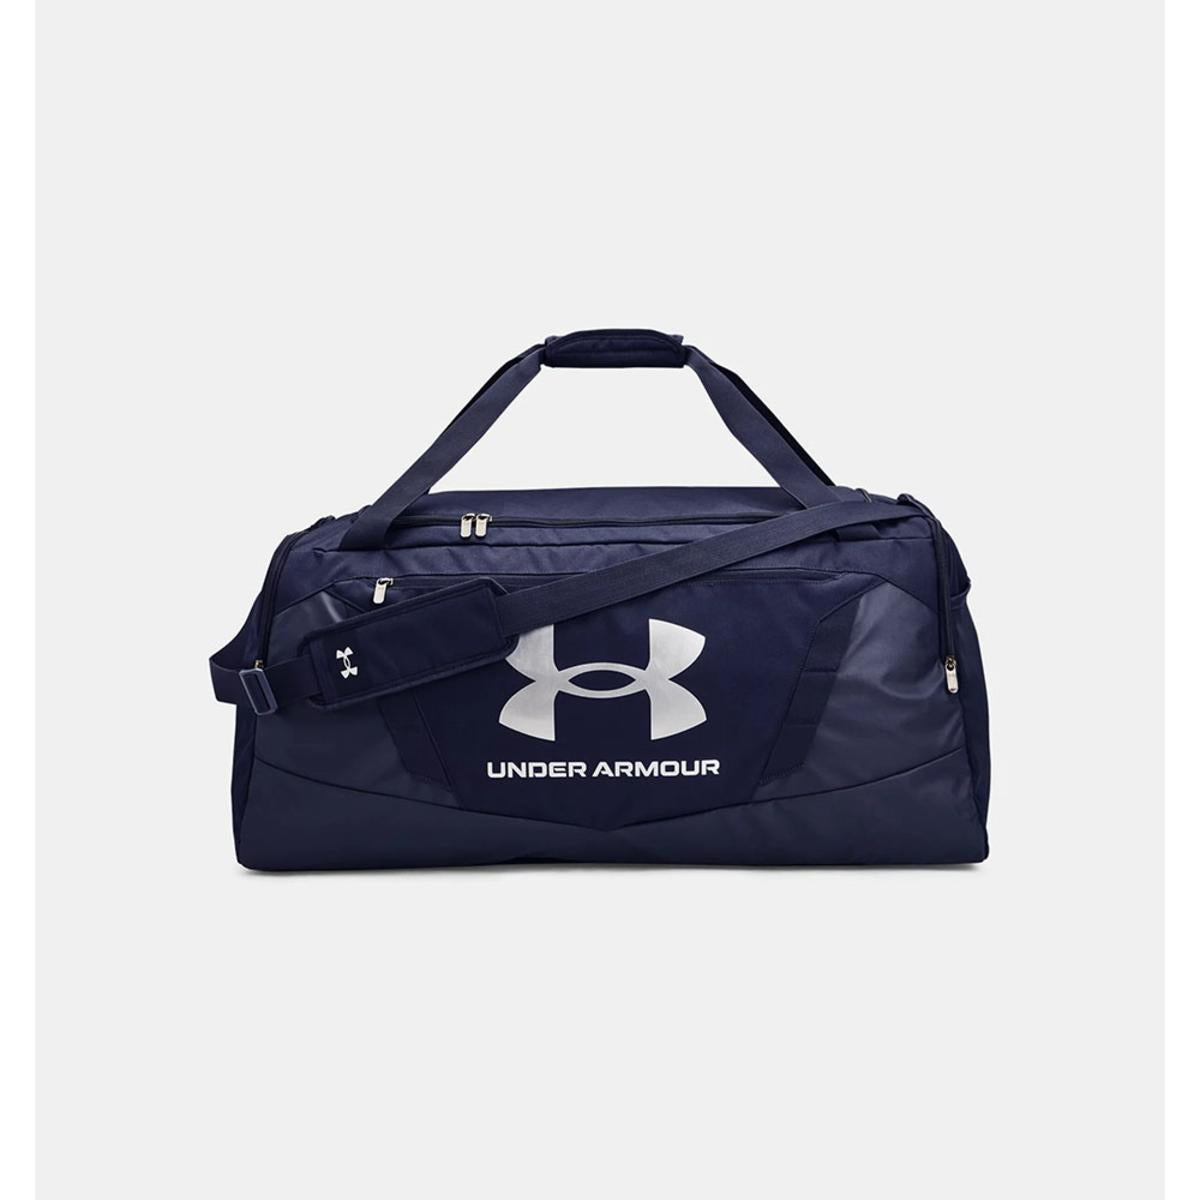 Amazon.com : Under Armour Men's UA Contain 4.0 Backpack Duffle OSFA Black :  Sports & Outdoors